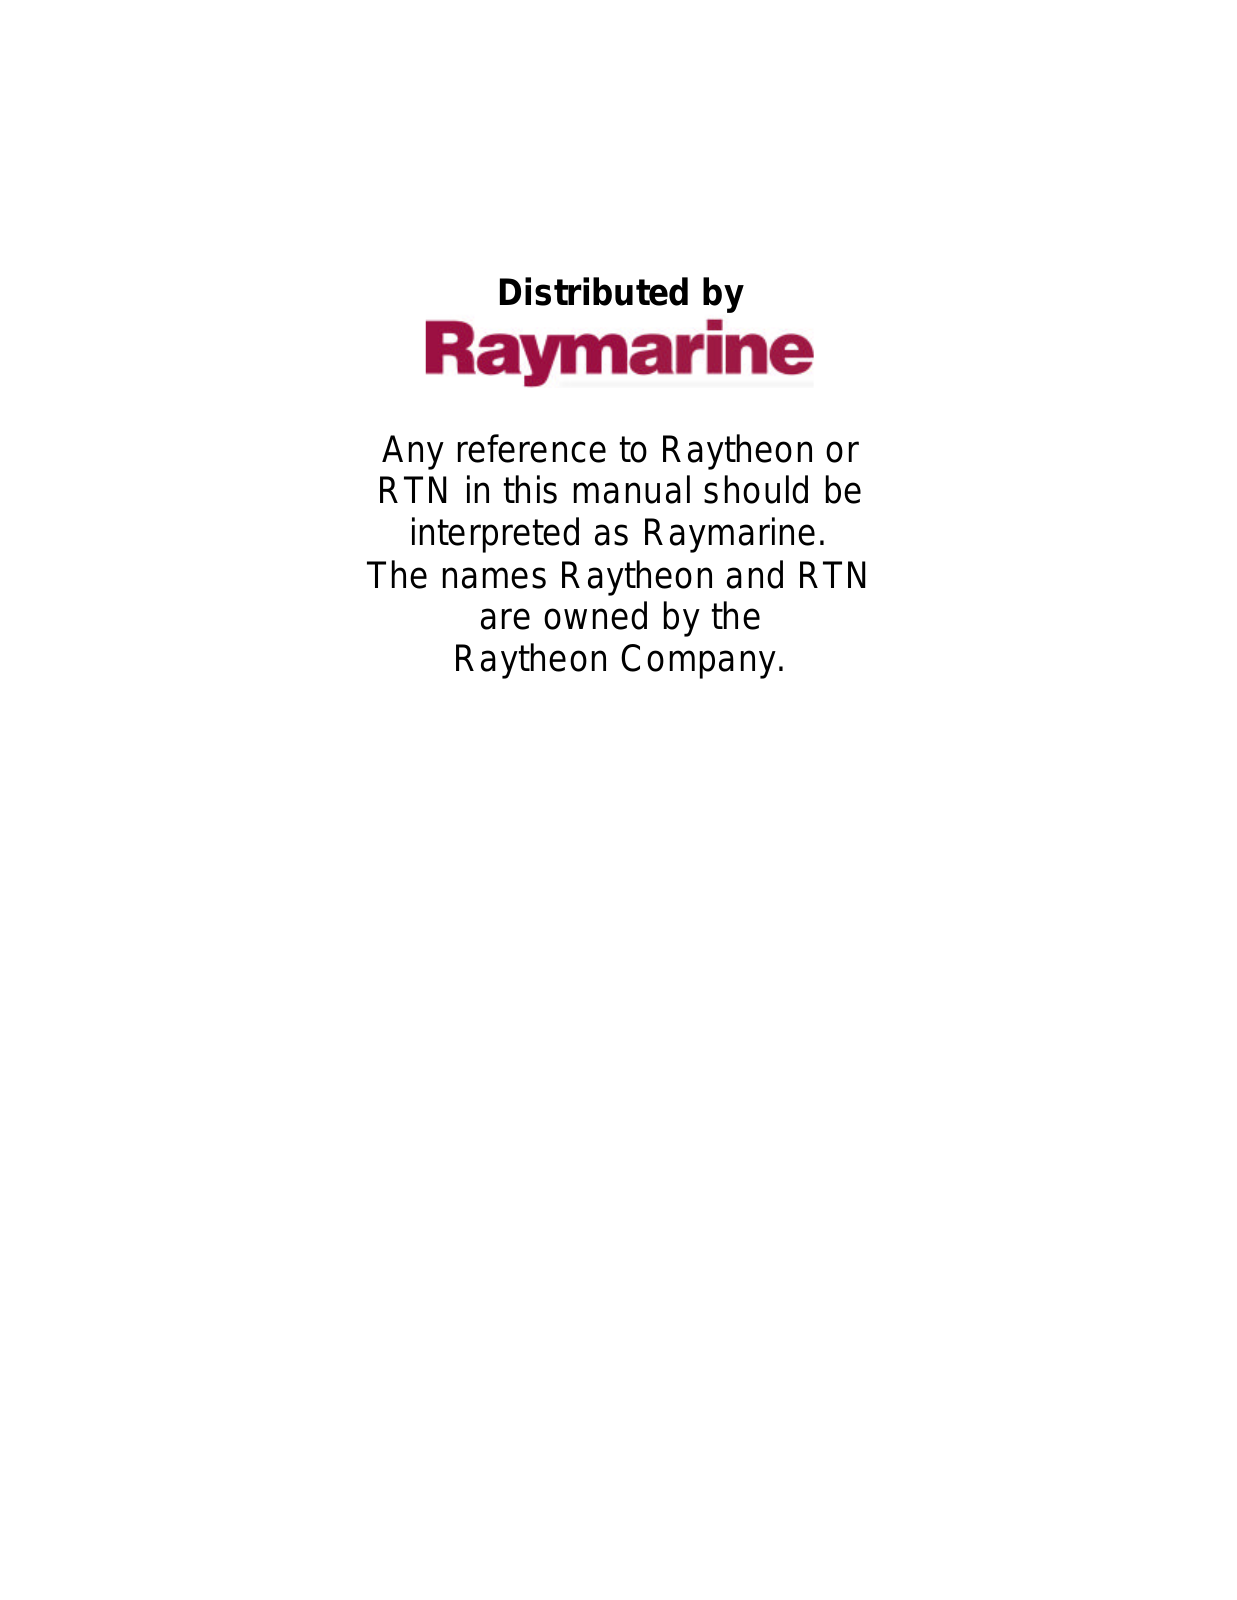 Raymarine APELCO DXL-6100 Manual